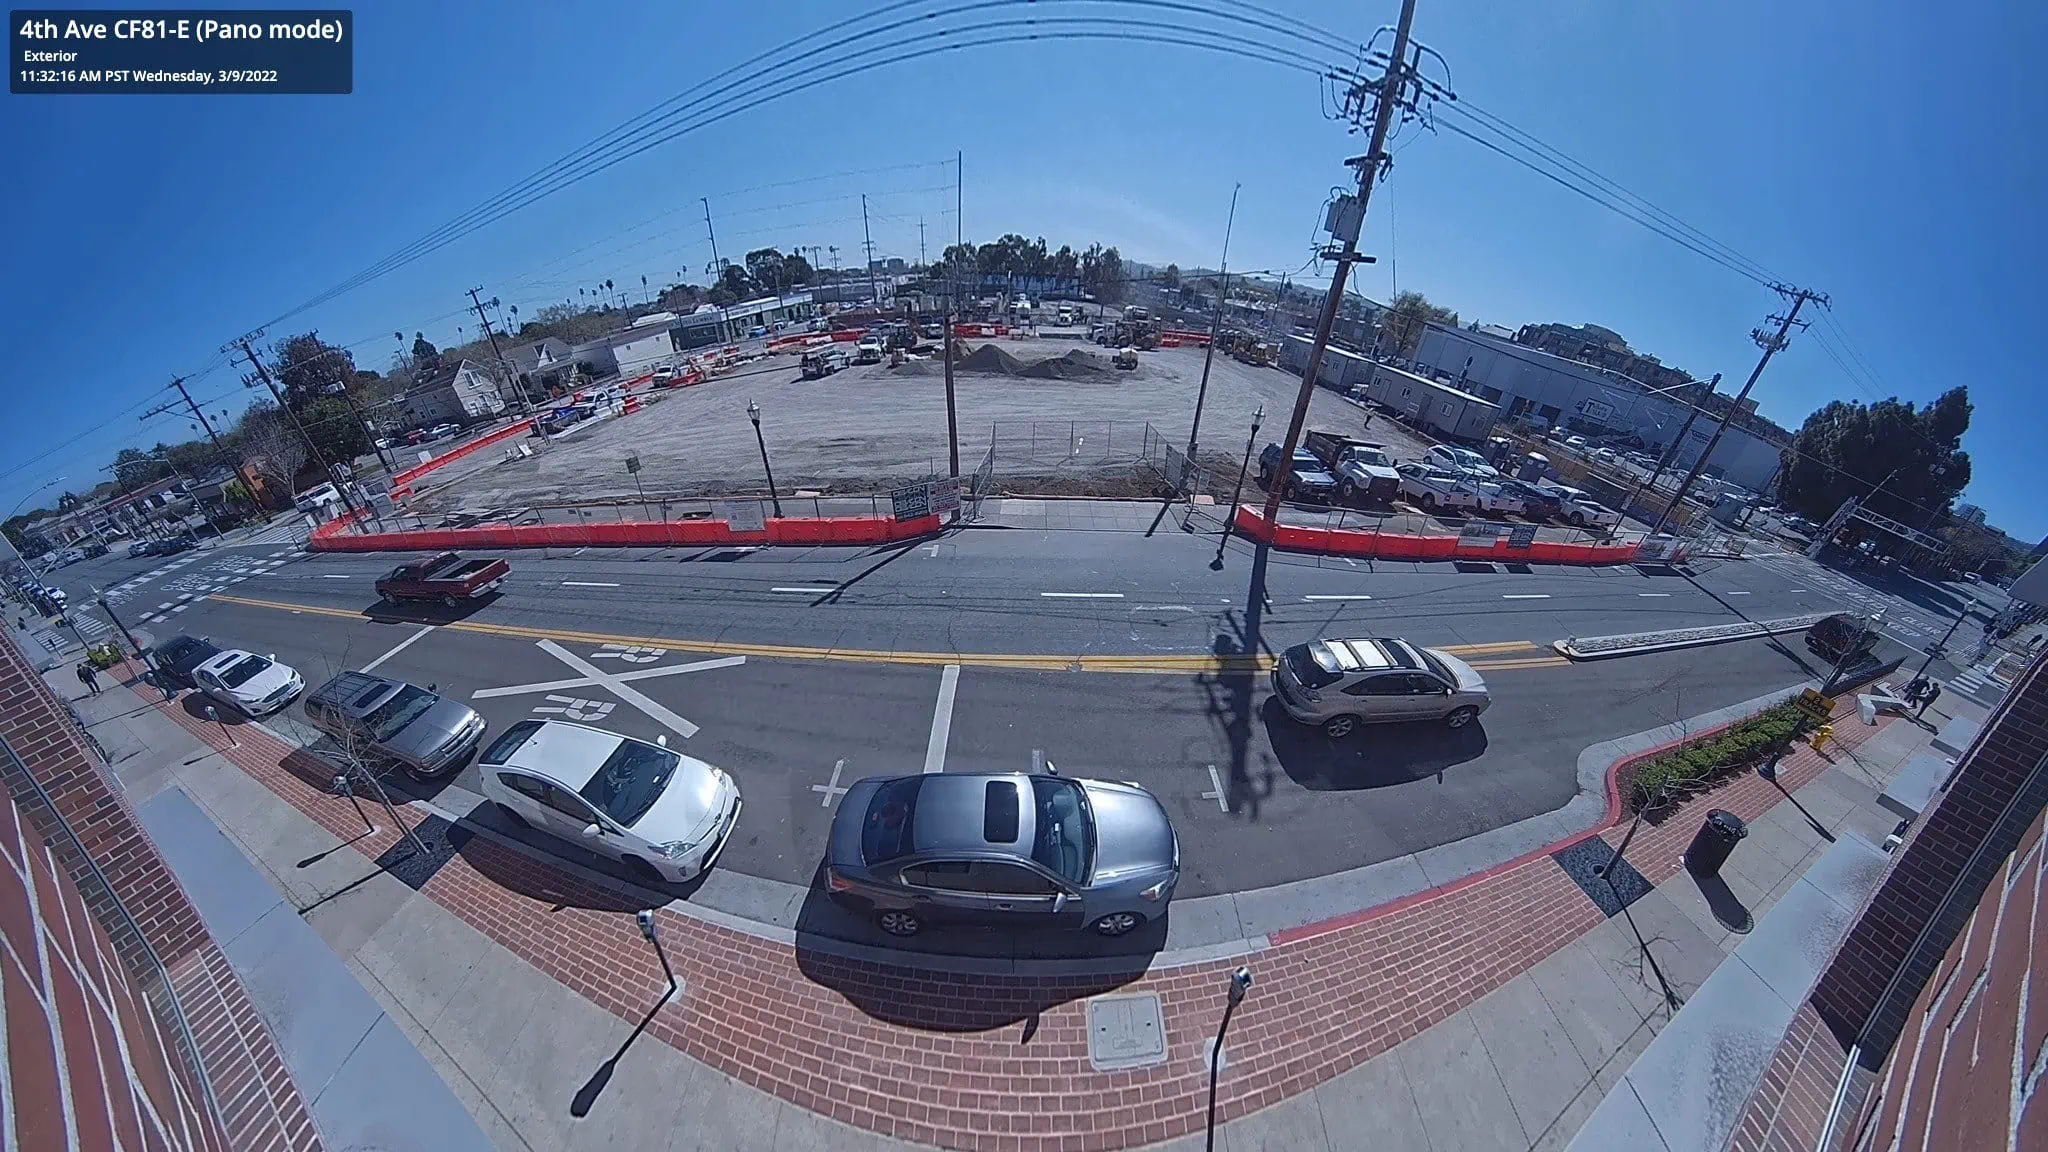 Parking lot monitored by fisheye camera in pan mode wireless